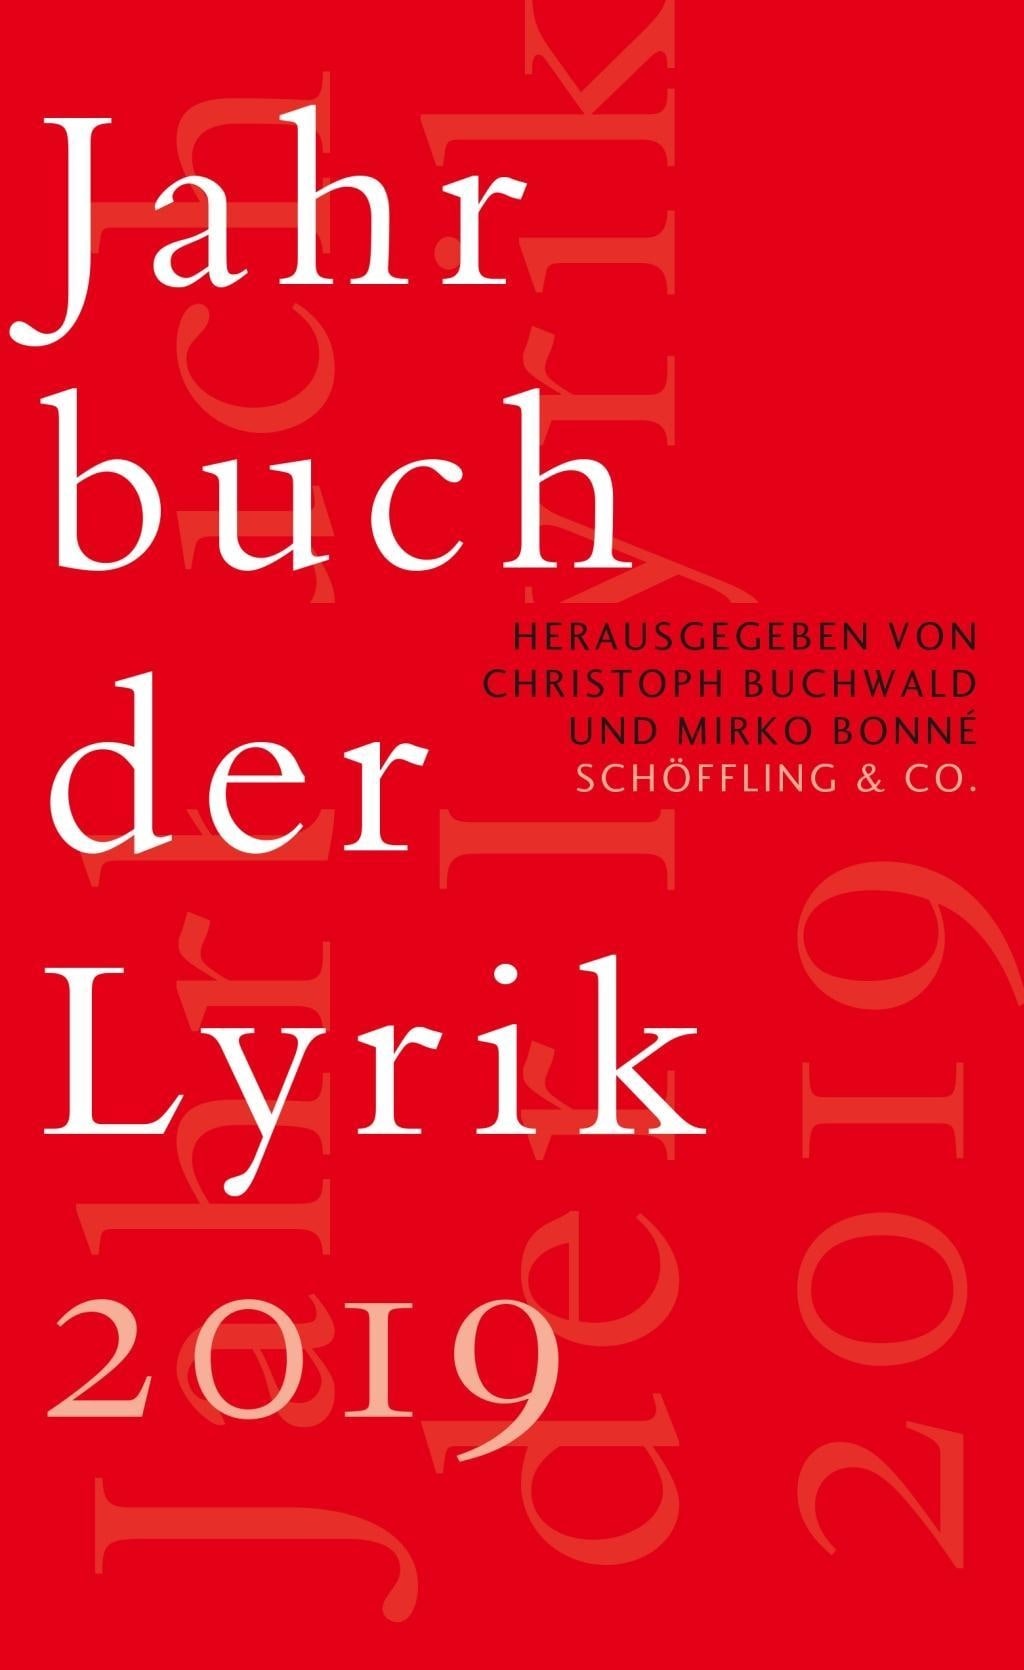 Jahrbuch der Lyrik 2019, Belletristik